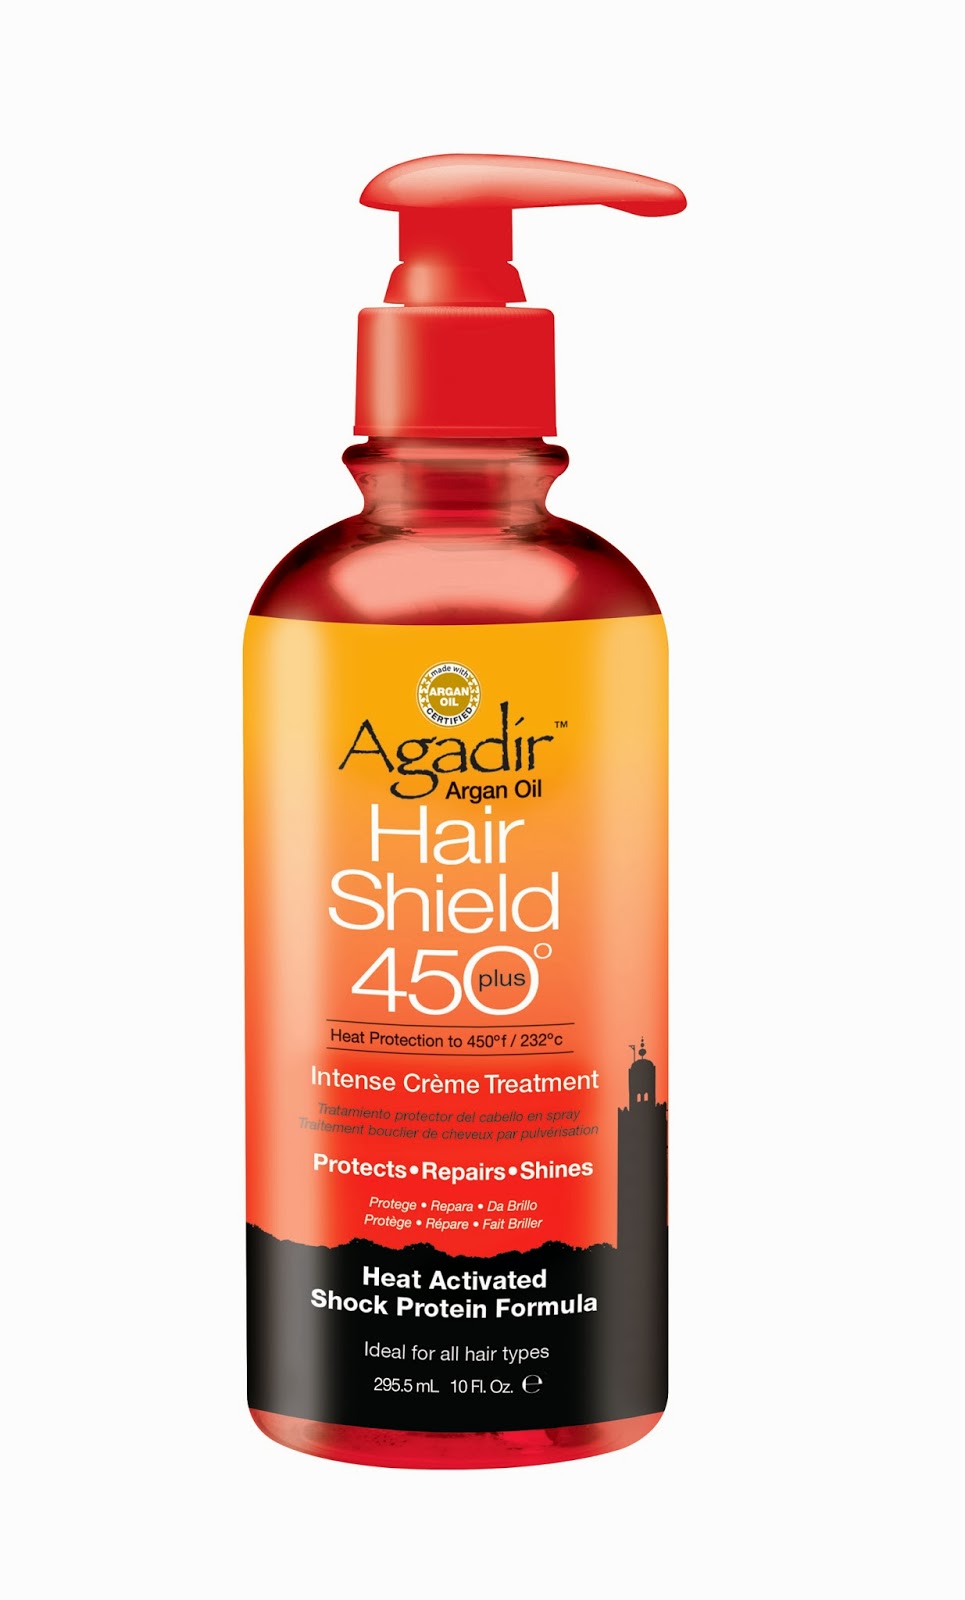 Agadir Argan Oil Hair Shield 450 Intense Crème Treatment Review | My Beauty  Source